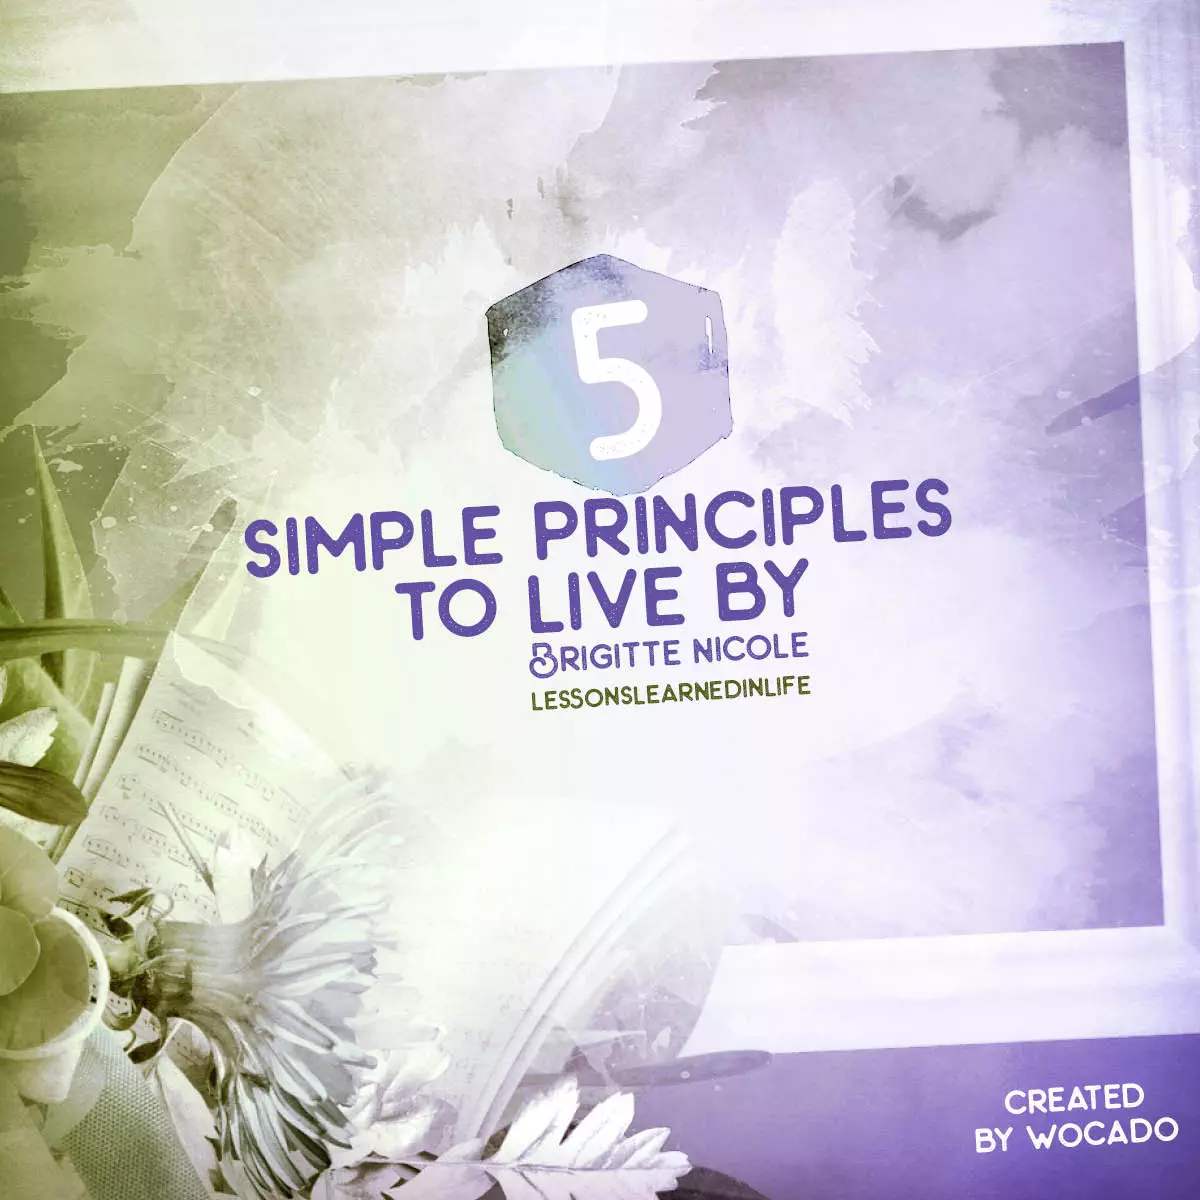 5 Simple Principles to Live By - Brigitte Nicole Video Quote by wocado